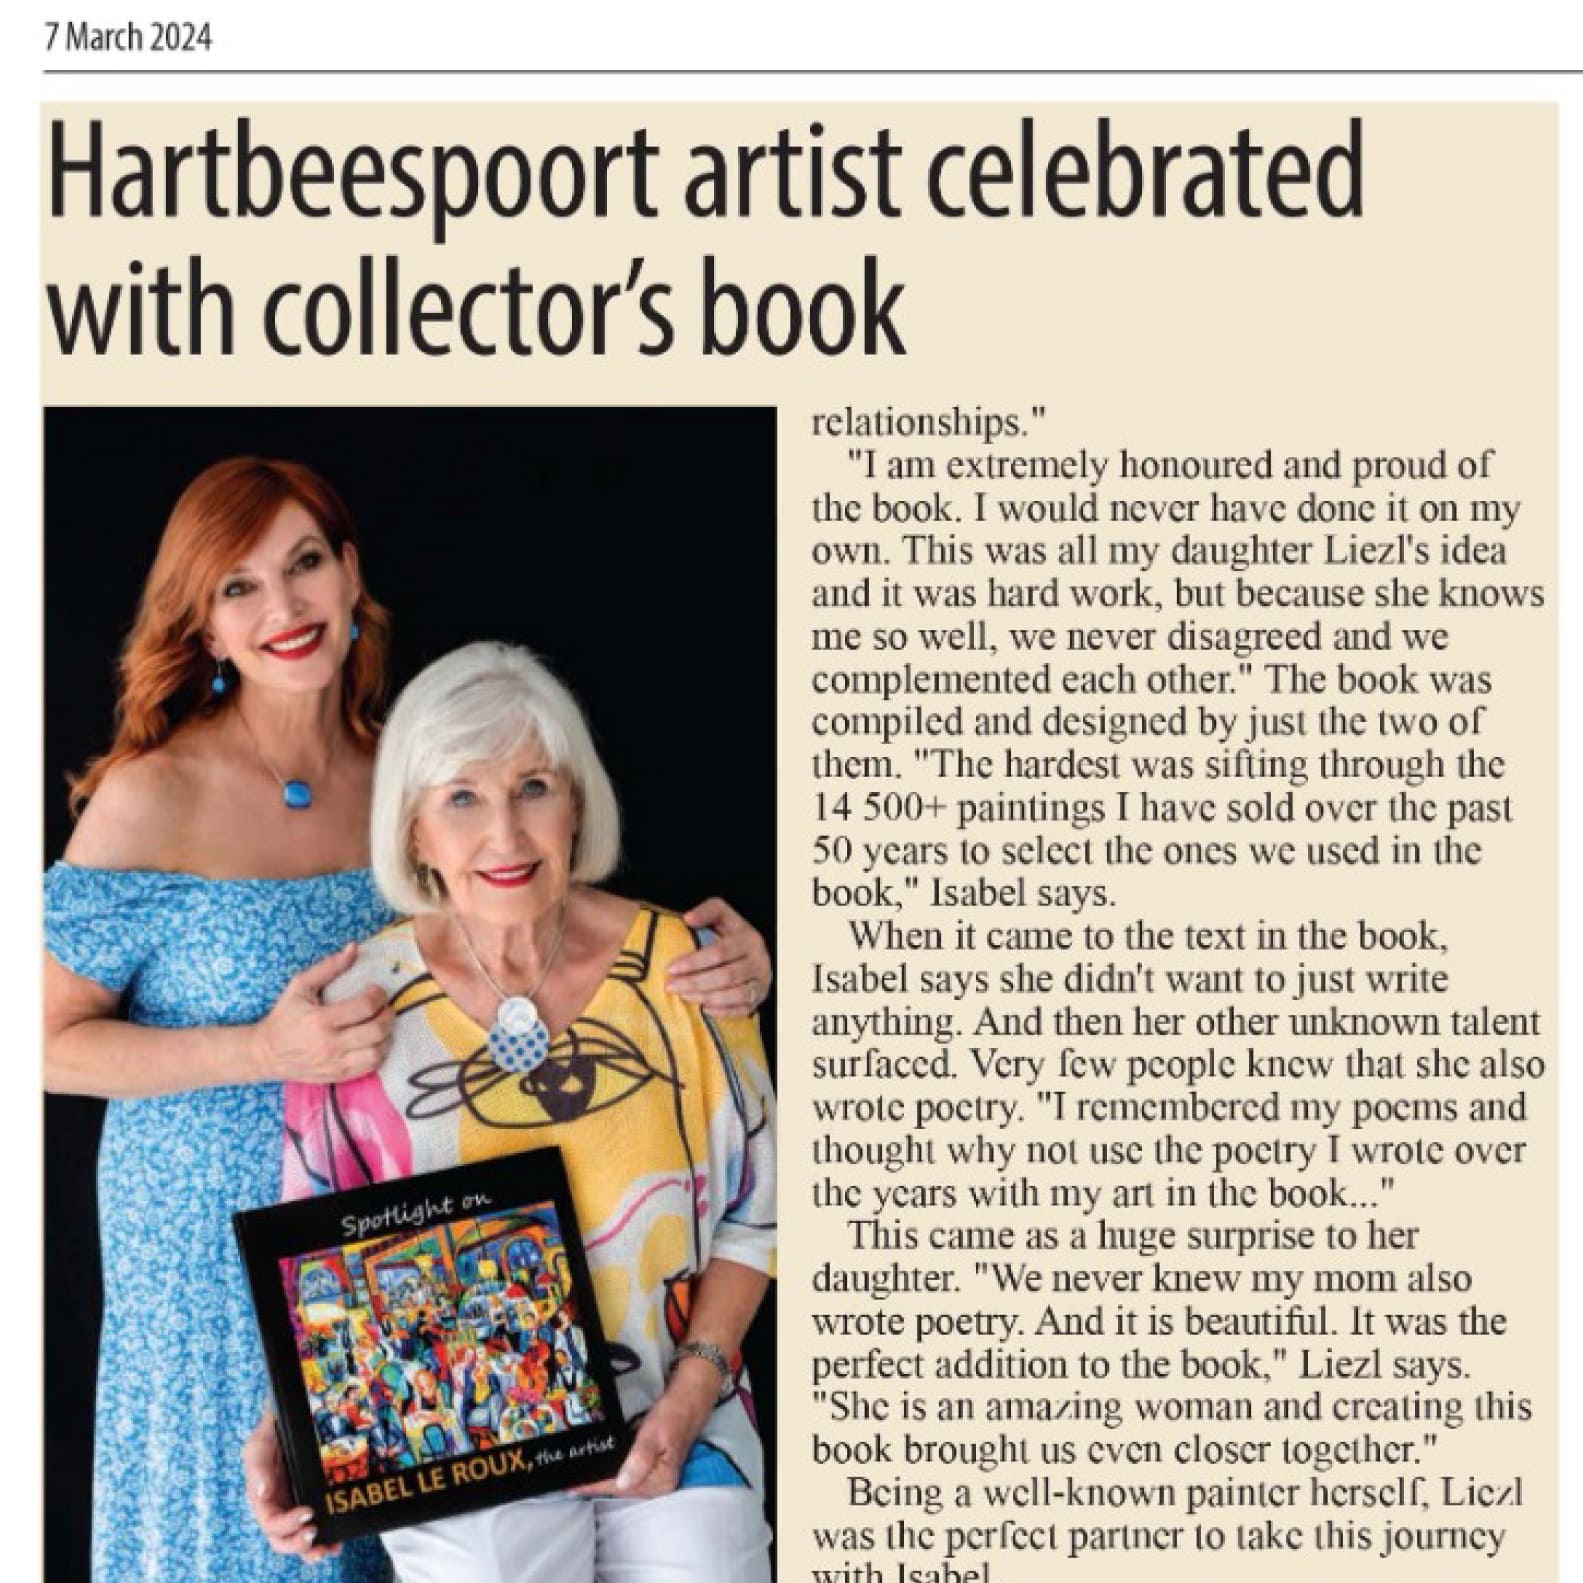 Hartebeespoort artist celebrates collector's book